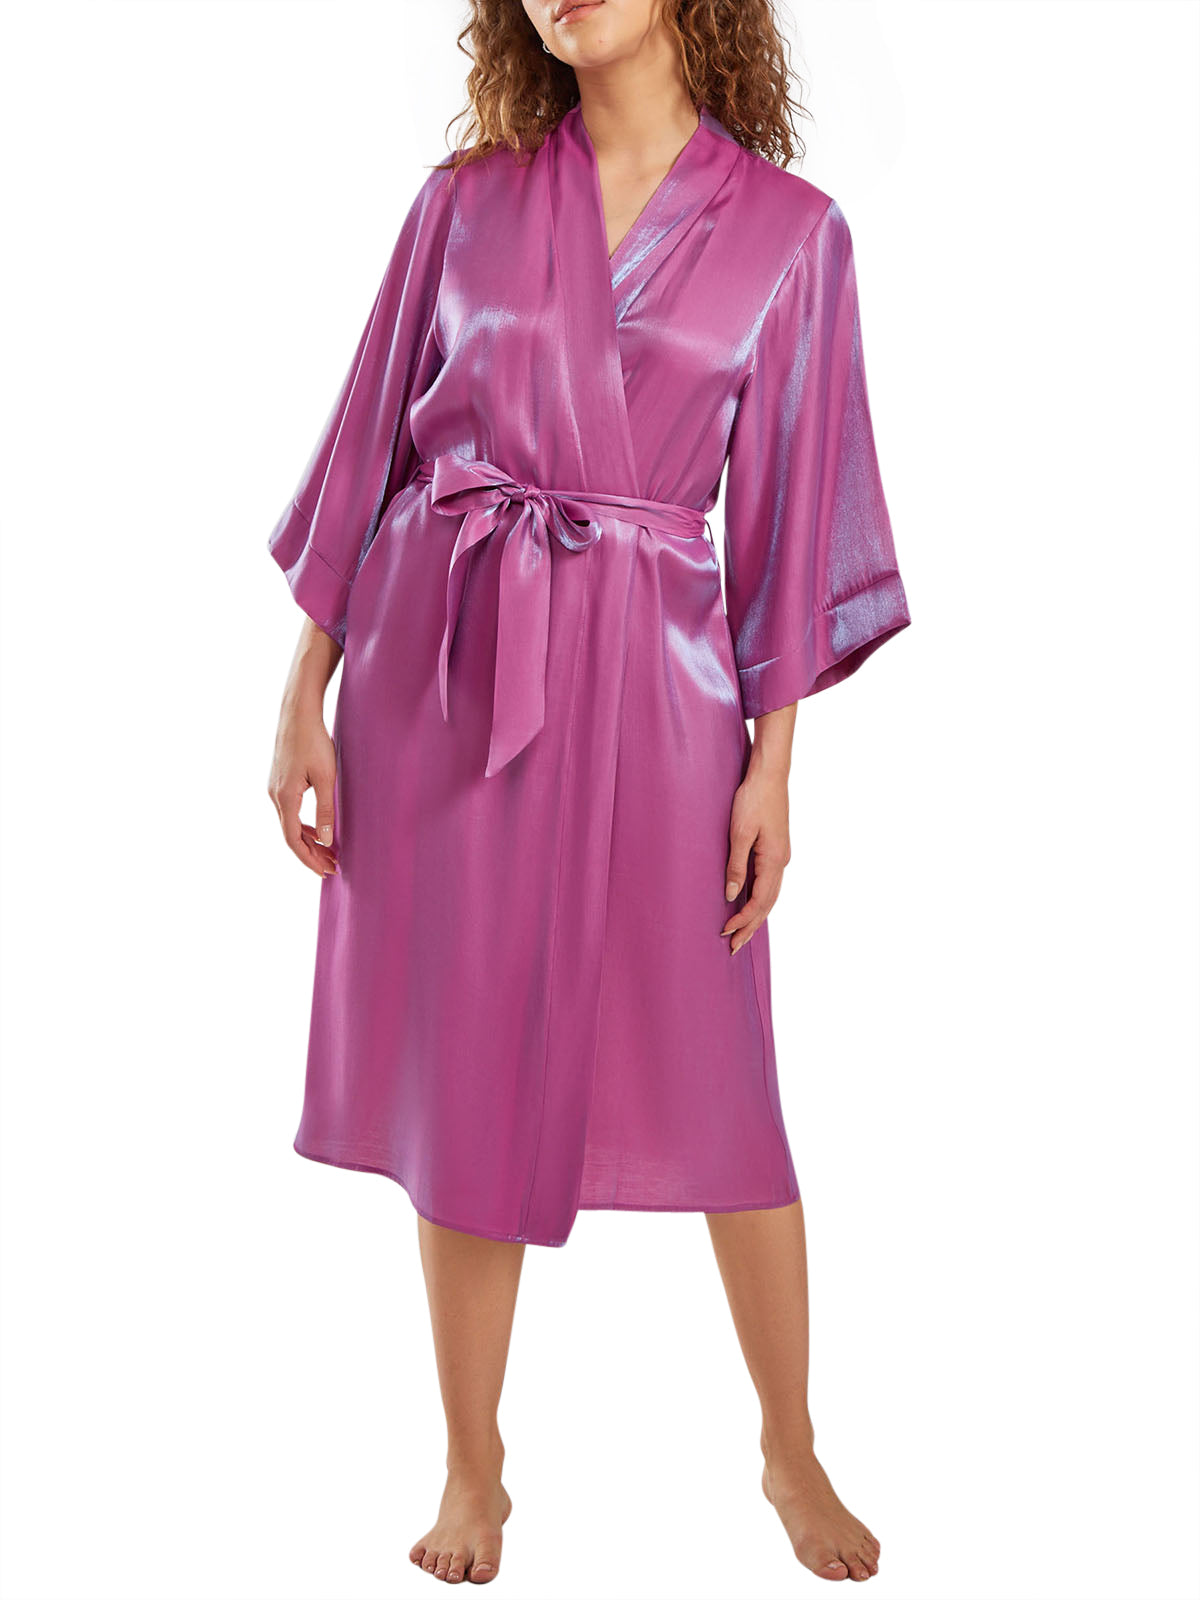 iCollection Robe Women's Janet Robe Loungewear